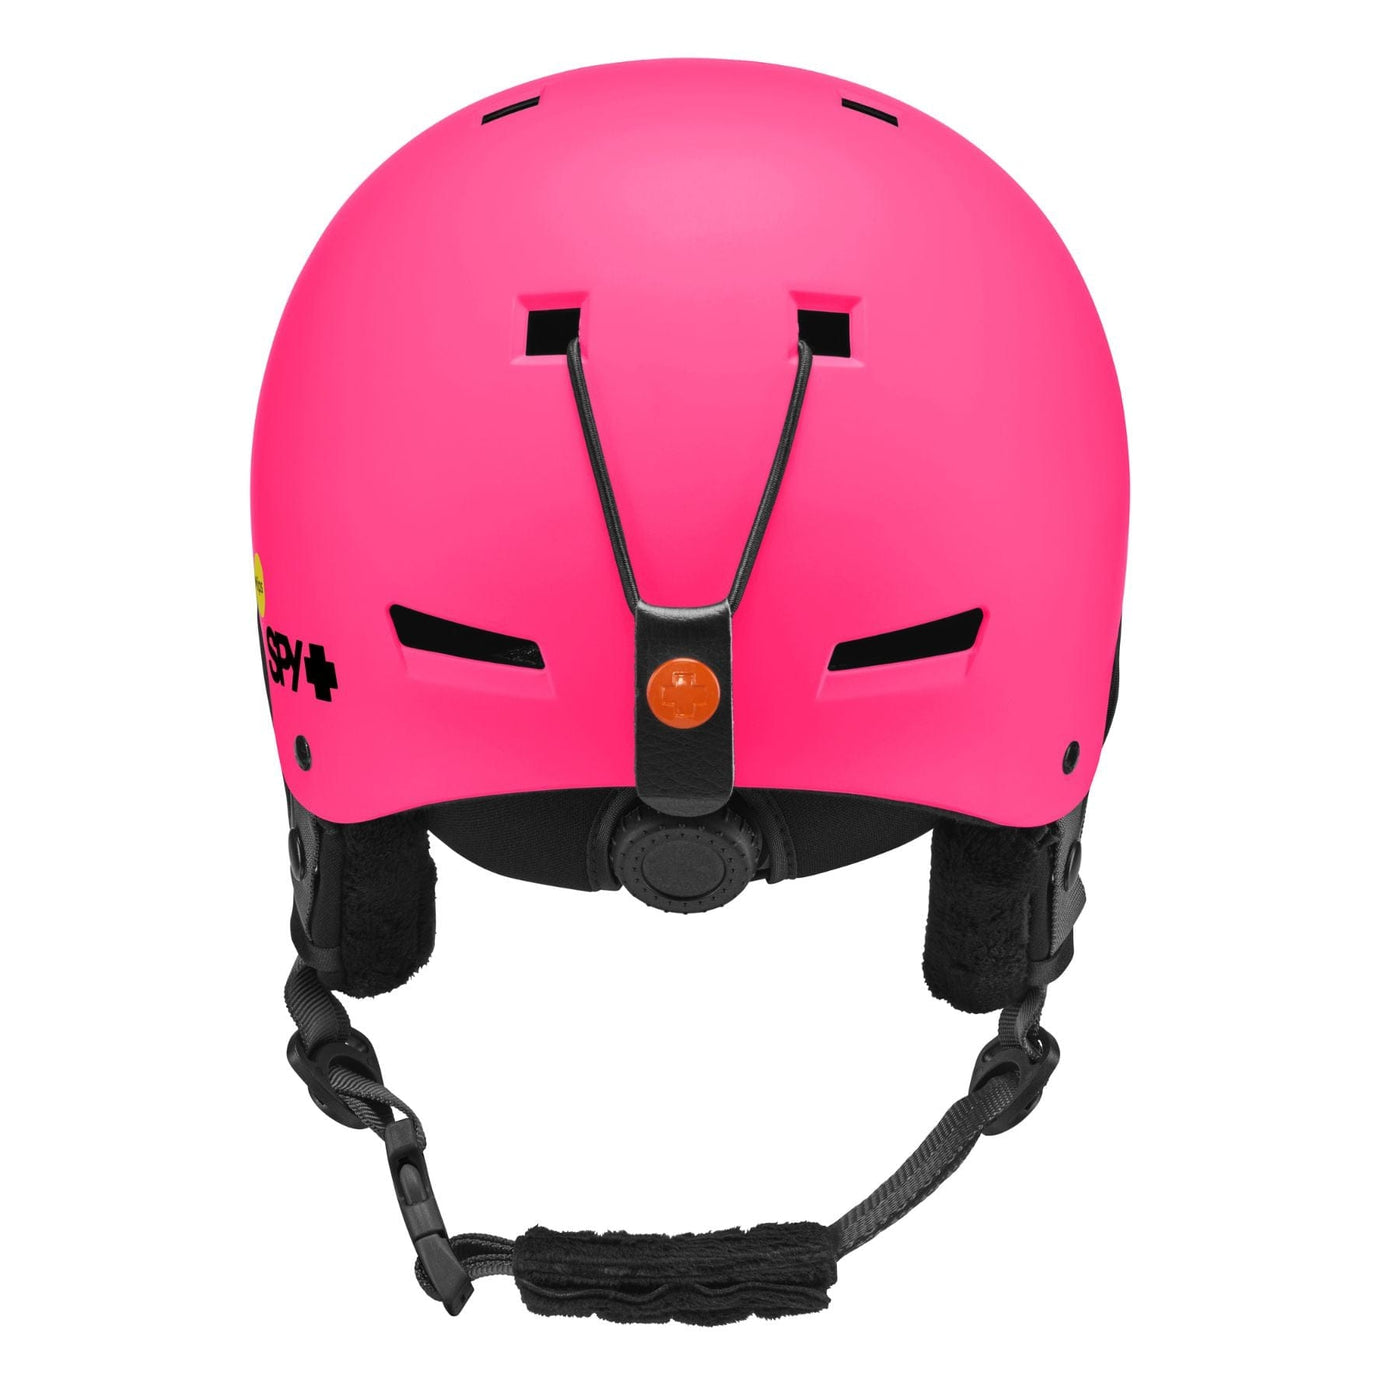 SPY Galactic MIPS Snow Helmet - Neon Pink